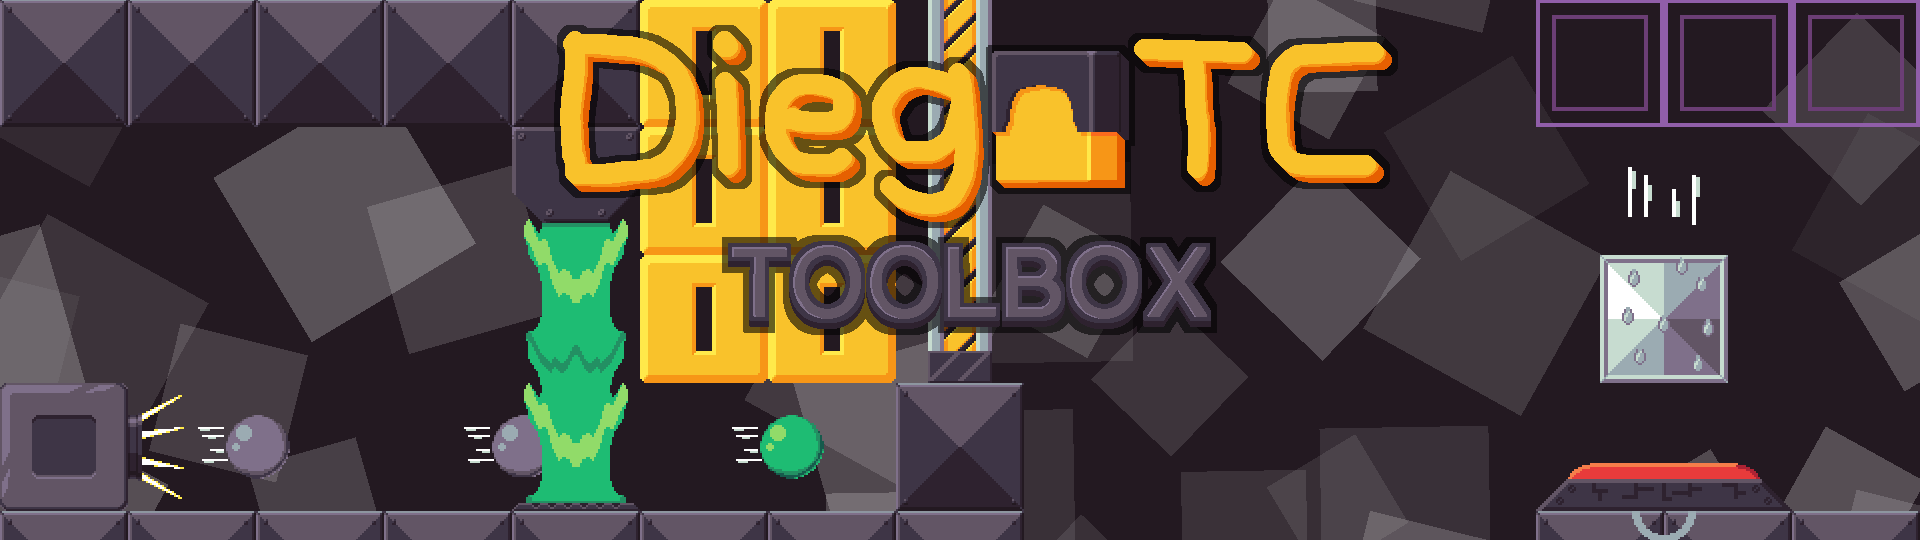 DiegoTC Toolbox (Classic Demo)